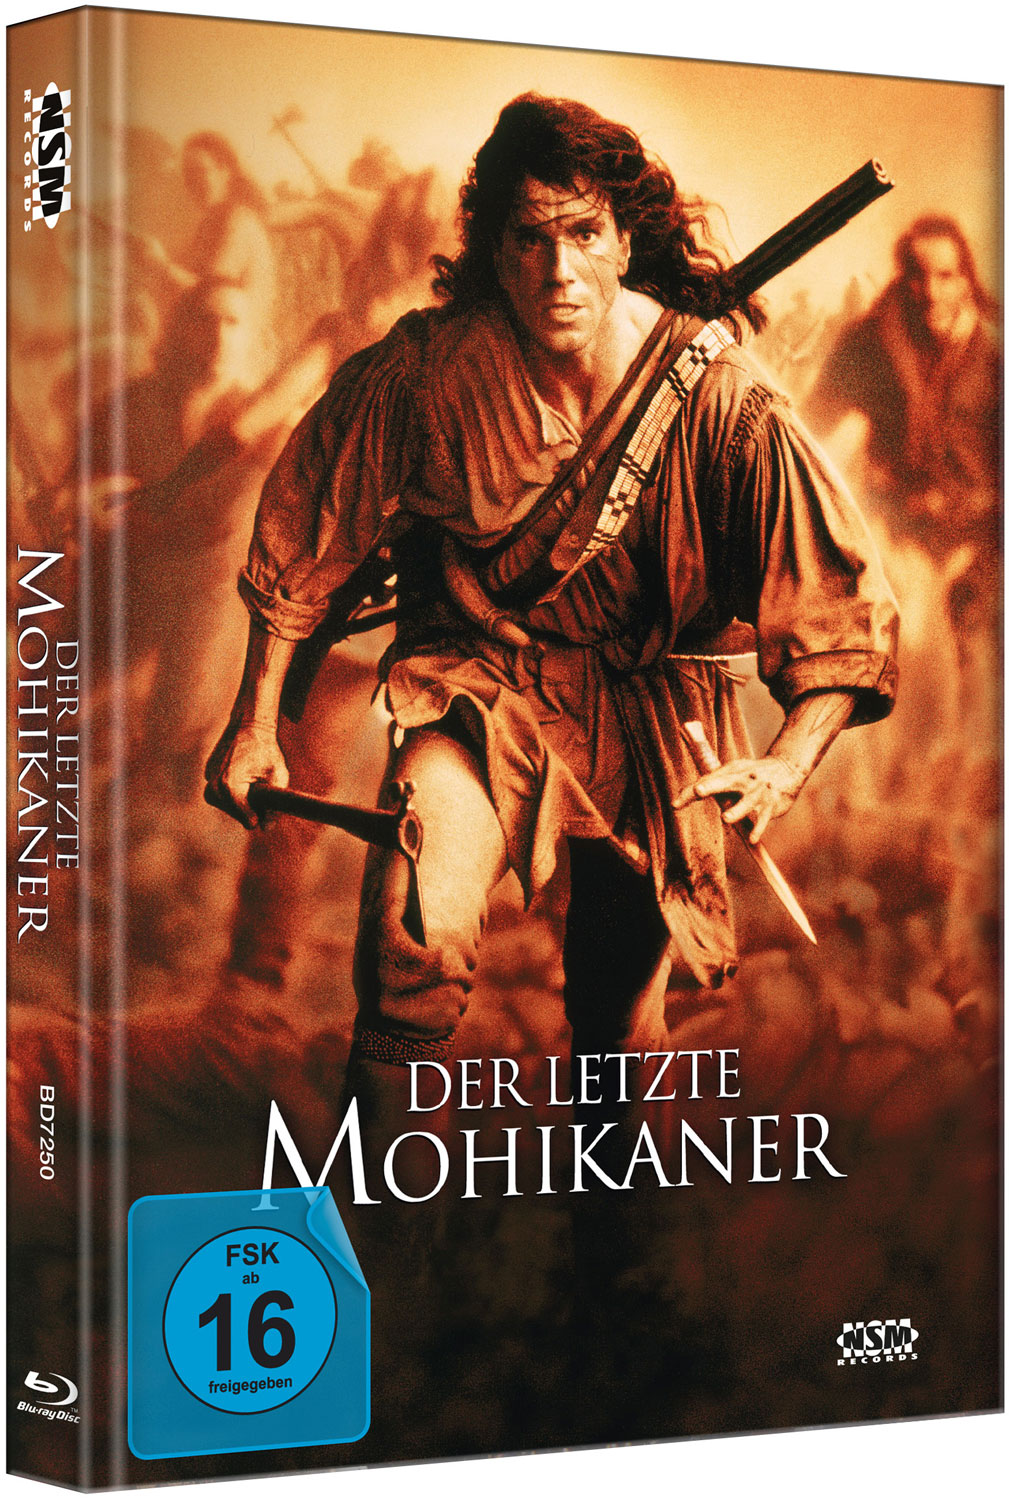 LETZTE MOHIKANER, DER (Blu-Ray) (2Discs) - Mediabook - Kinofassung & Directors Definitive Cut